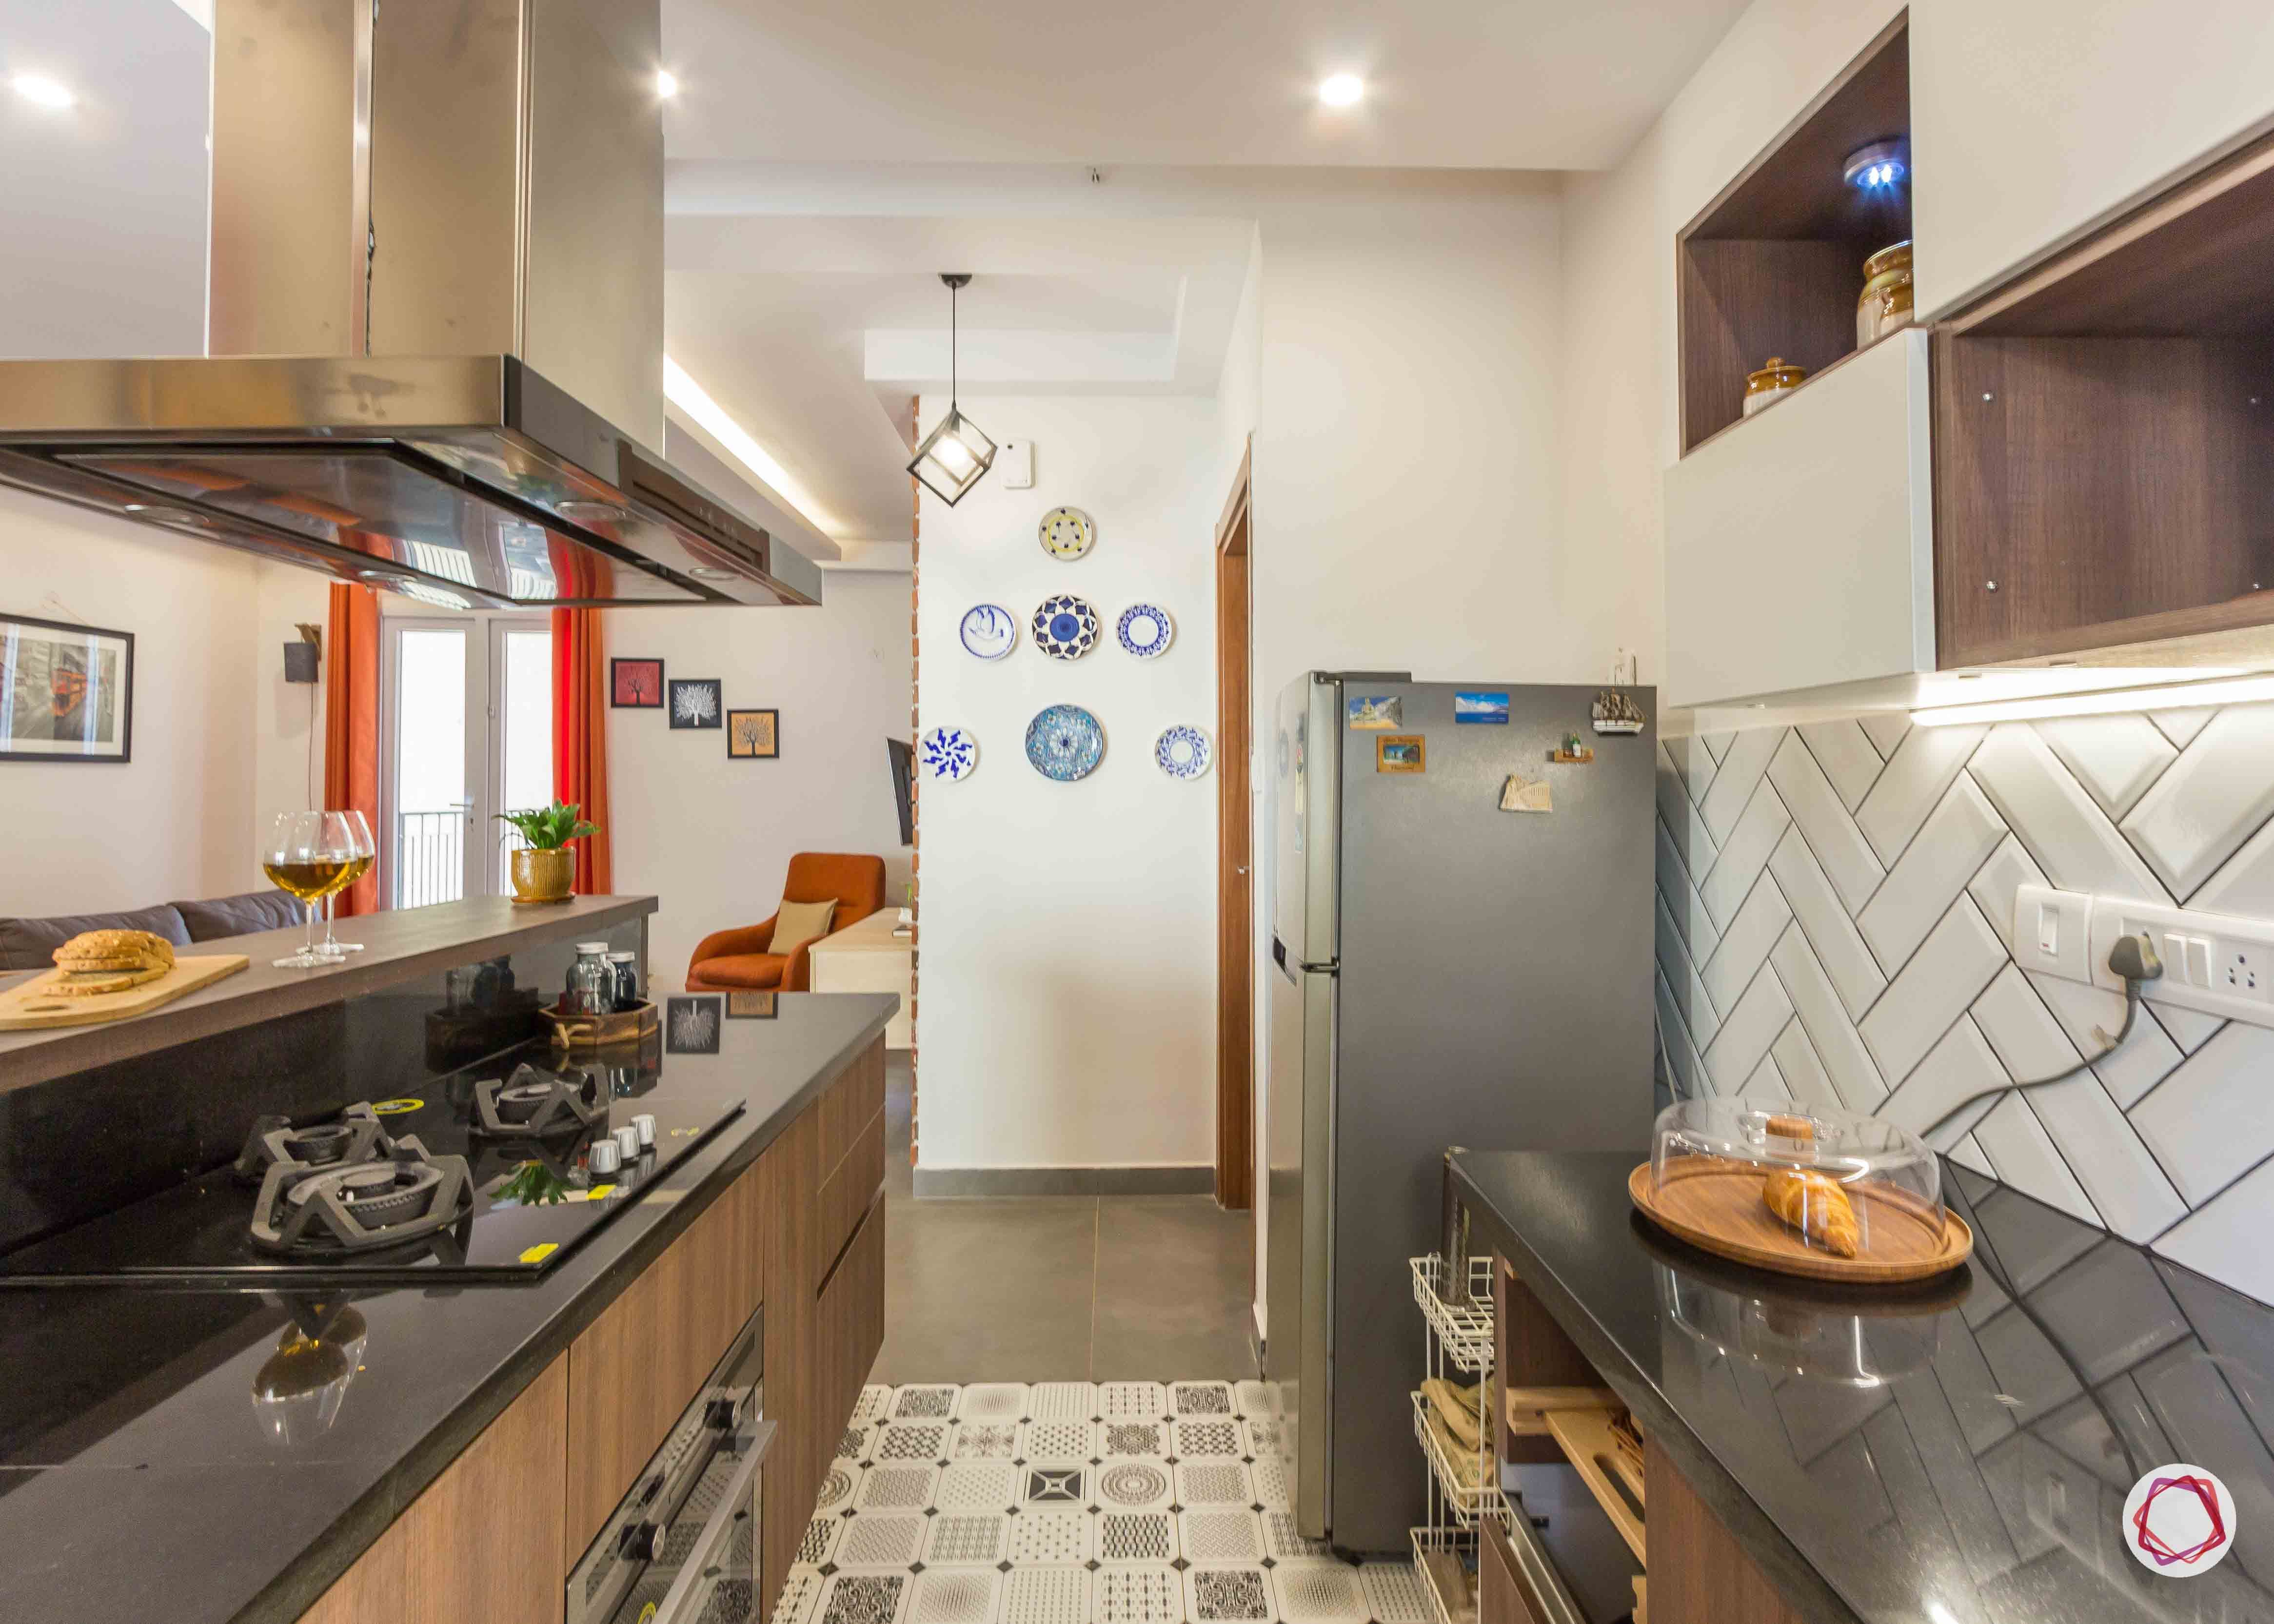 Best interior designers in bangalore_kitchen-cabinets-backsplash-fridge